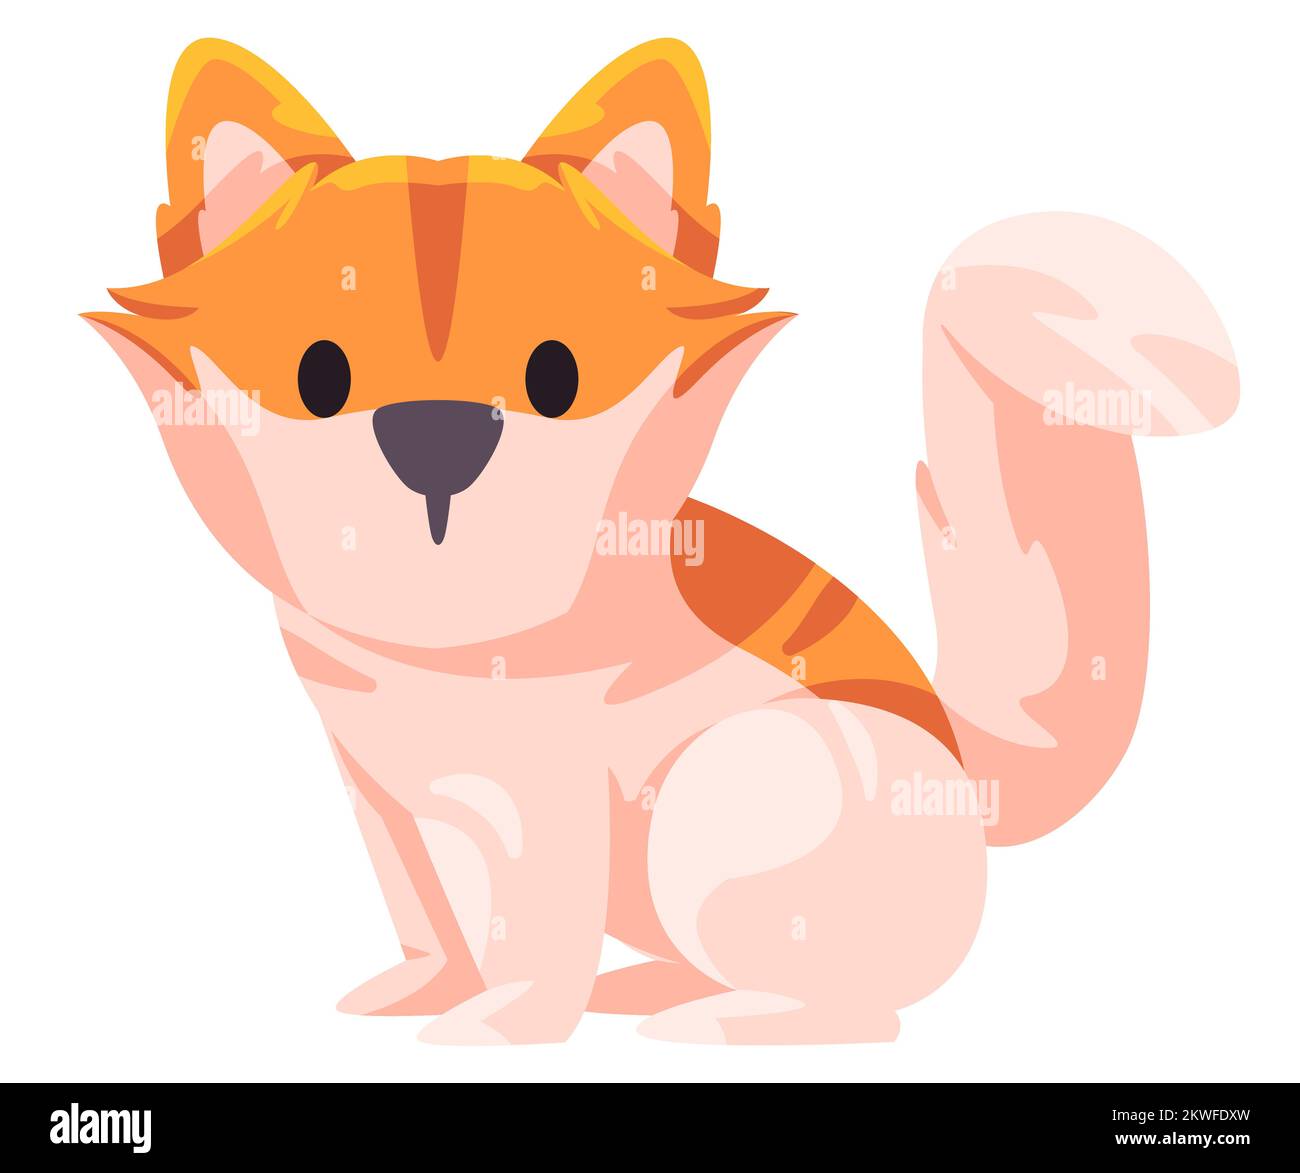 Furry dog cub puppy sitting illustration graphic friendlu pet orange white color Stock Vector